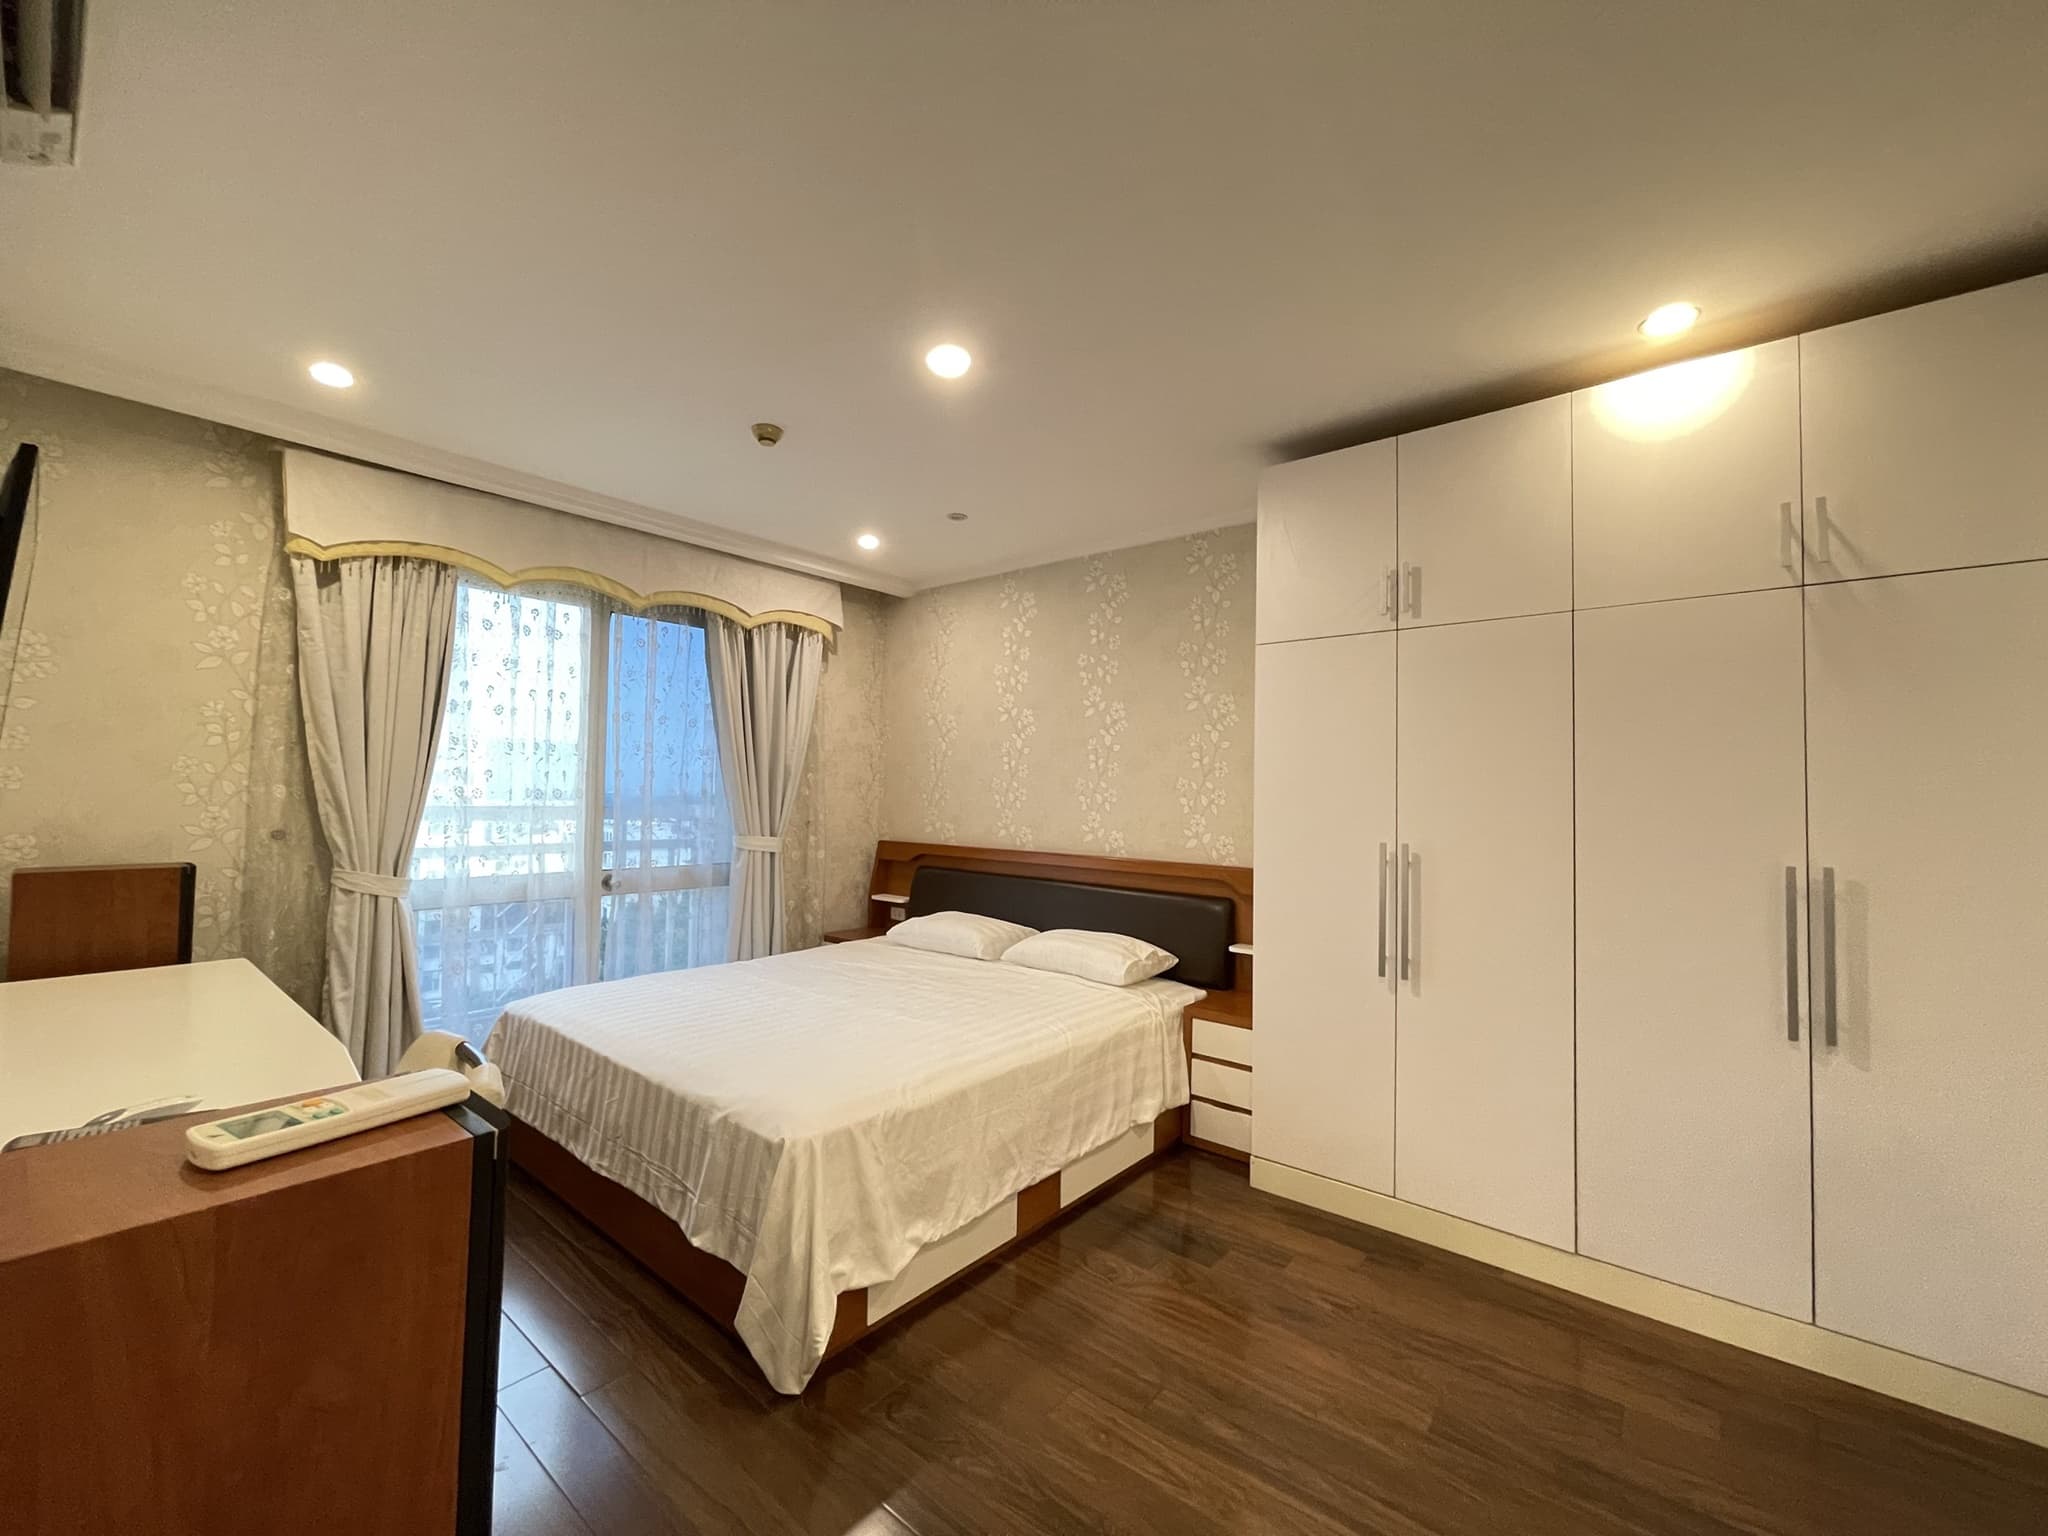 Glamorous 3-bedroom apartment in G3 Ciputra for rent 7